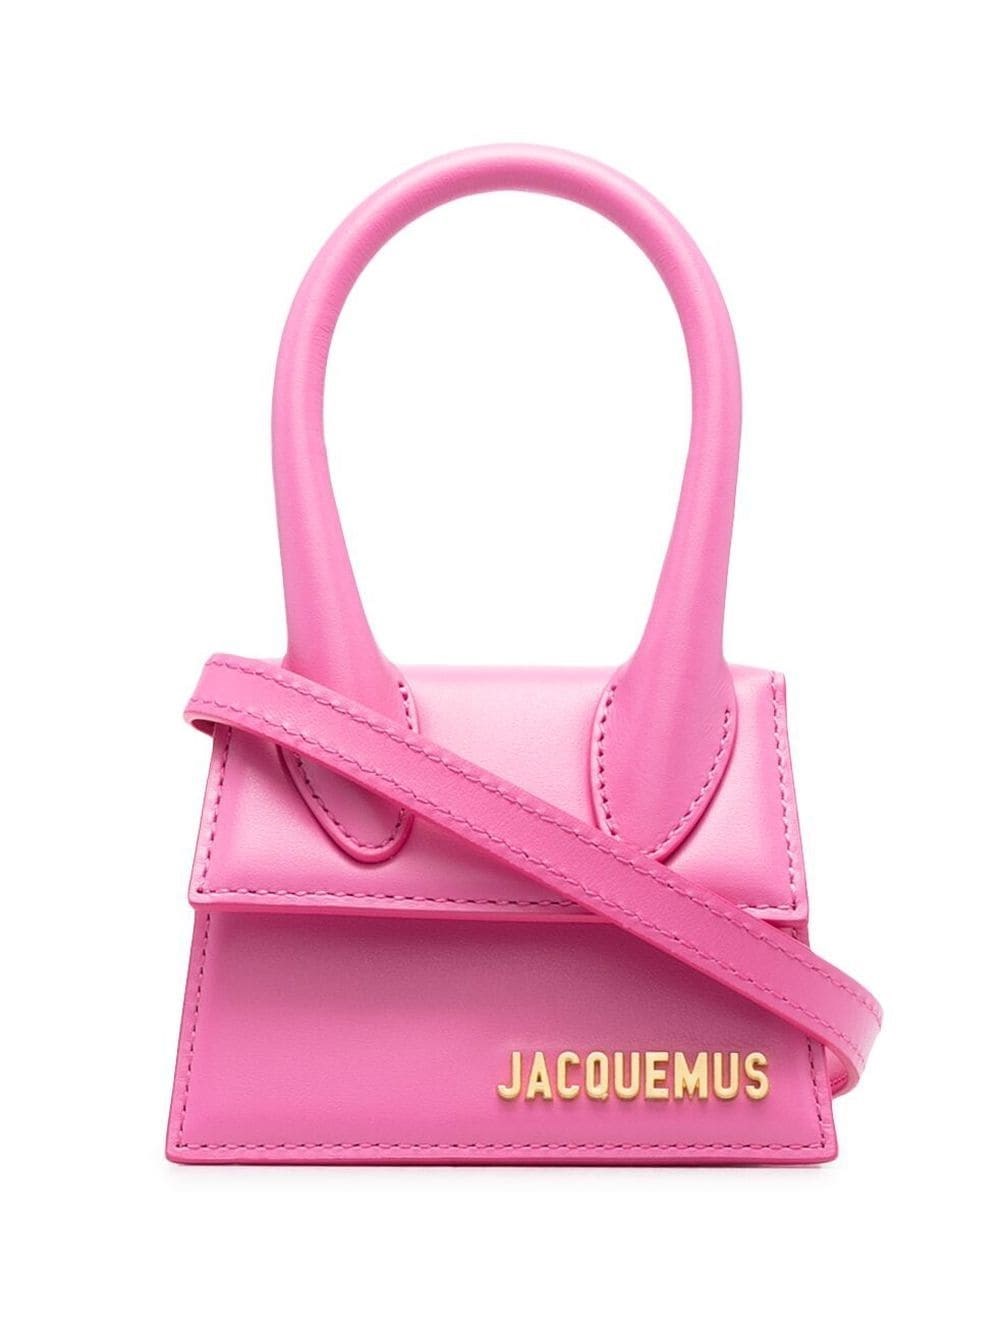 jacquemus Le Chiquito mini bag available on theapartmentcosenza